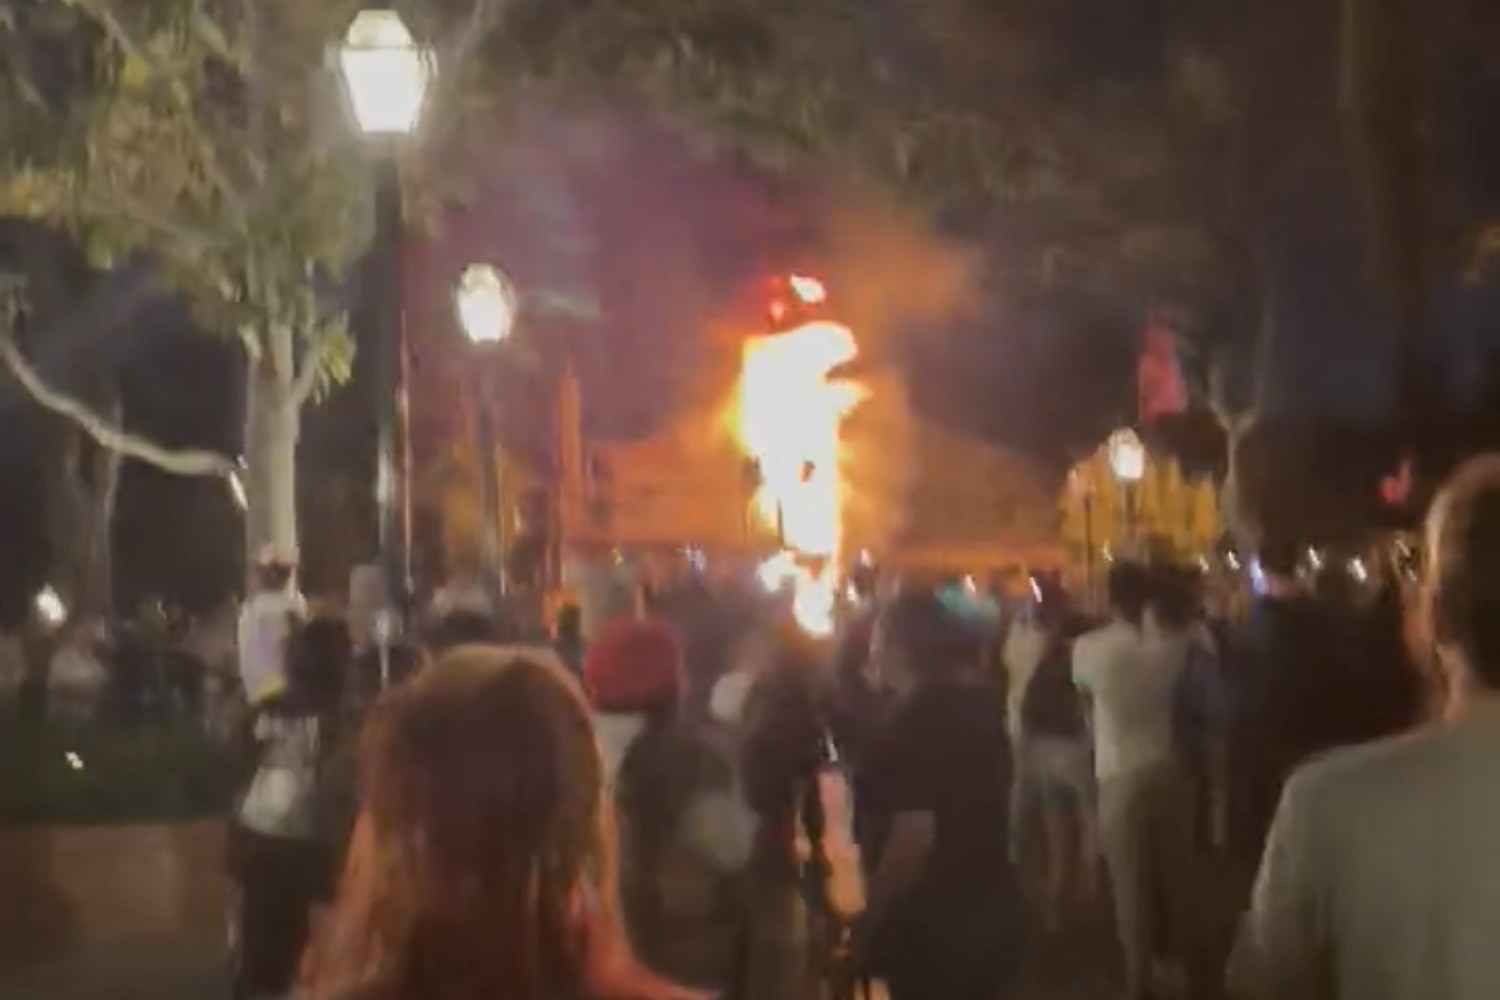 Fantasmic Dragon Catches Fire at Disneyland